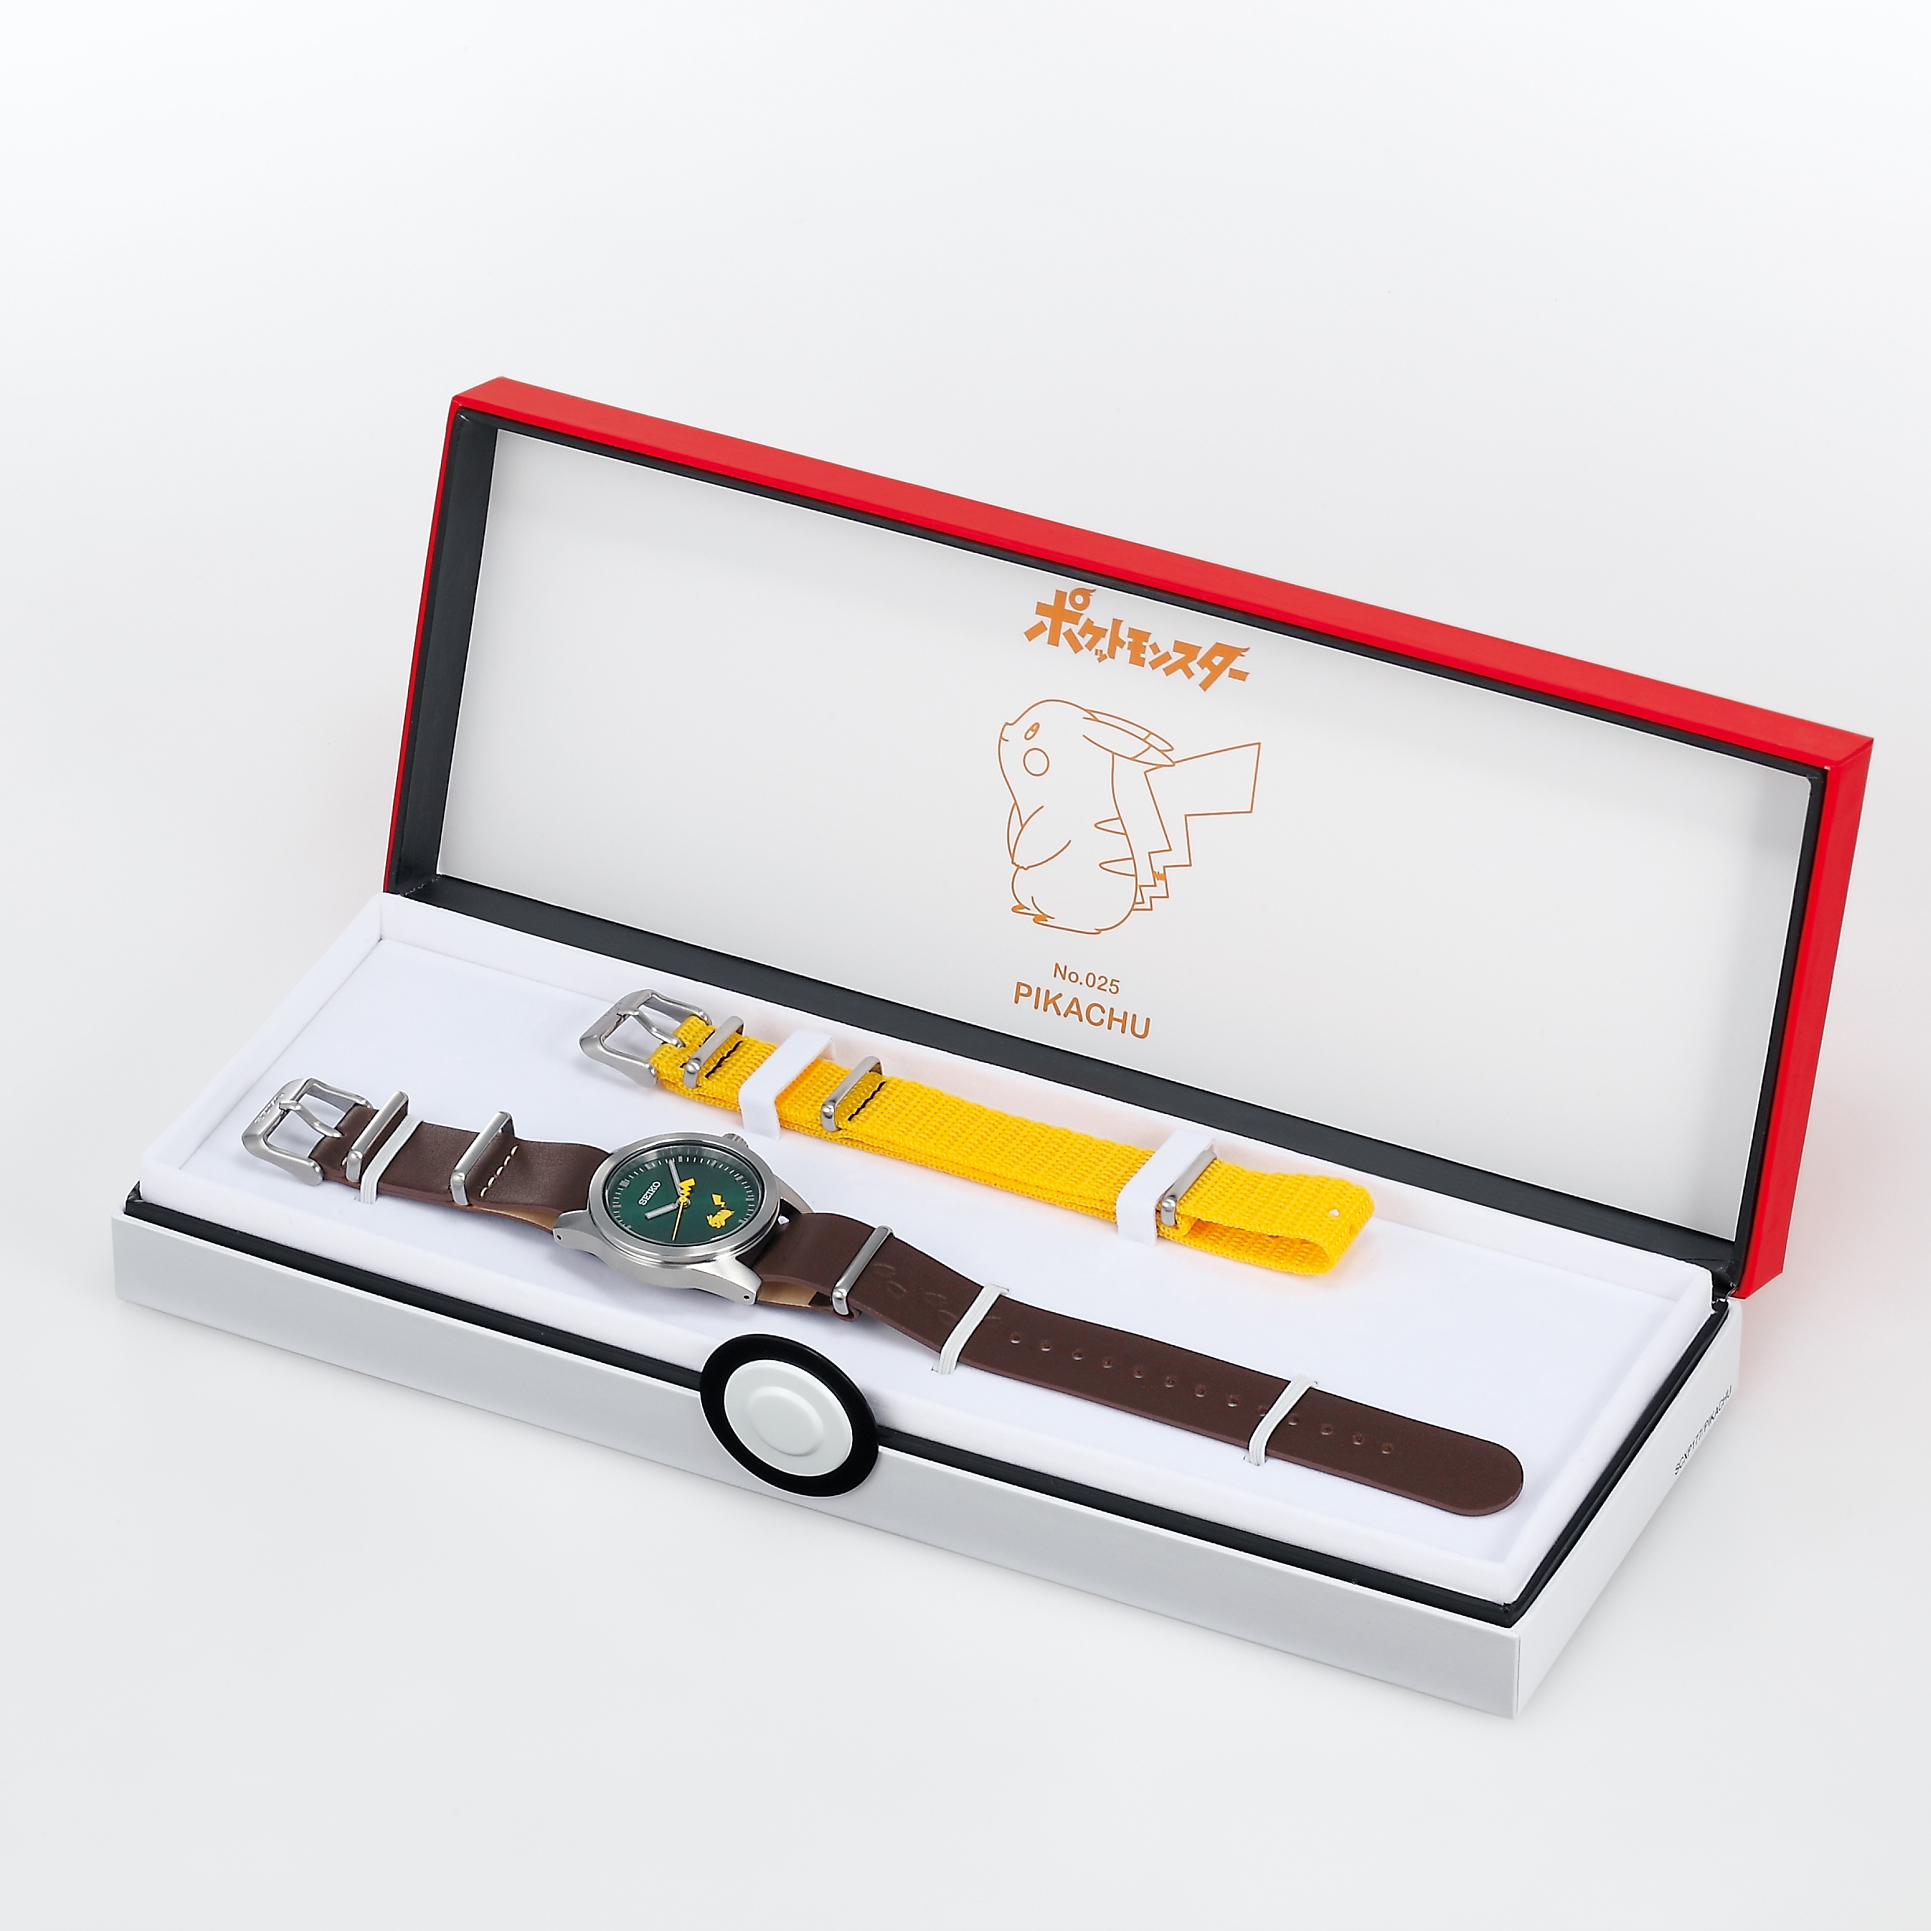 New Pokémon Seiko watch collection stars Pikachu, Eevee and Mewtwo ...